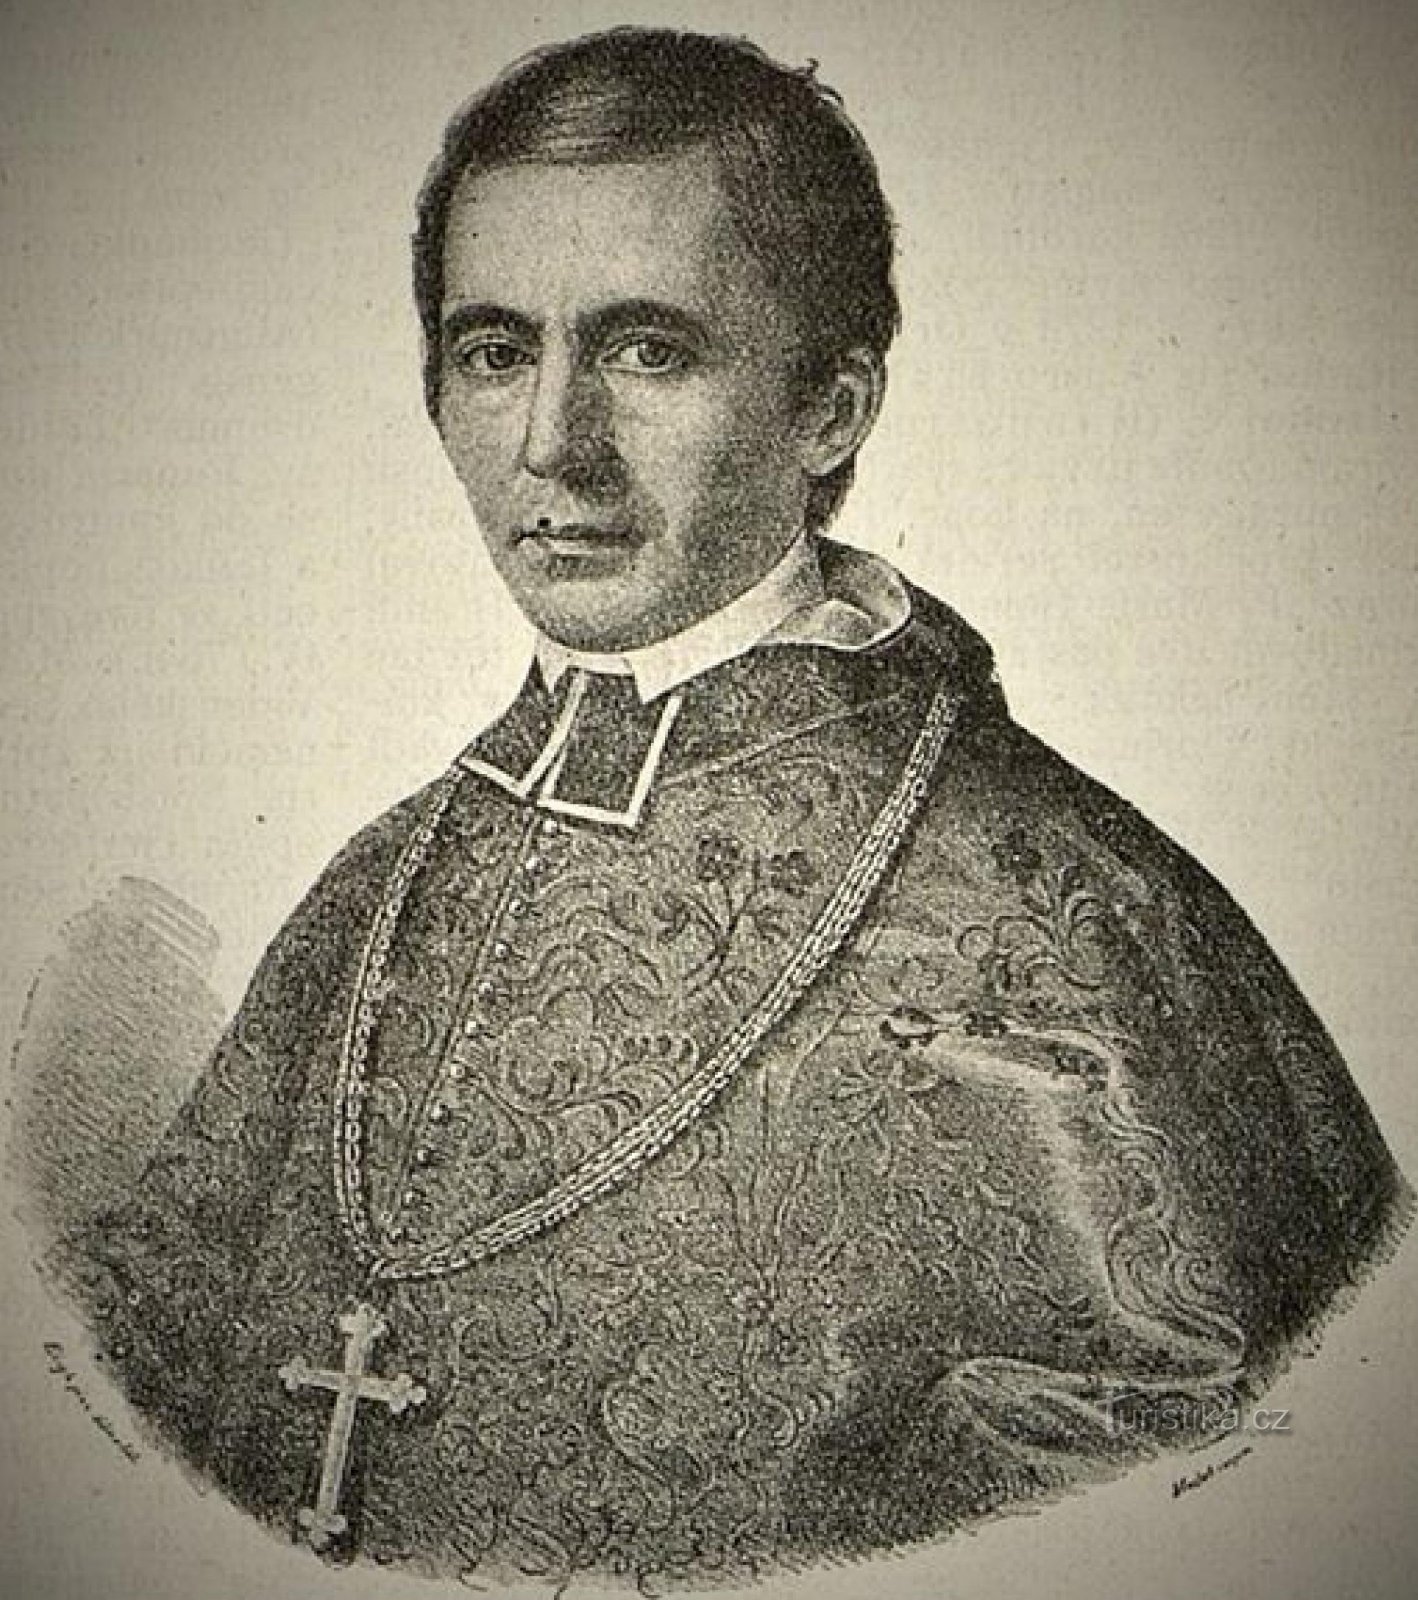 De bisschop van Hradec Králové Hradec Králové, mgr. Dr. Karel B. Hanl